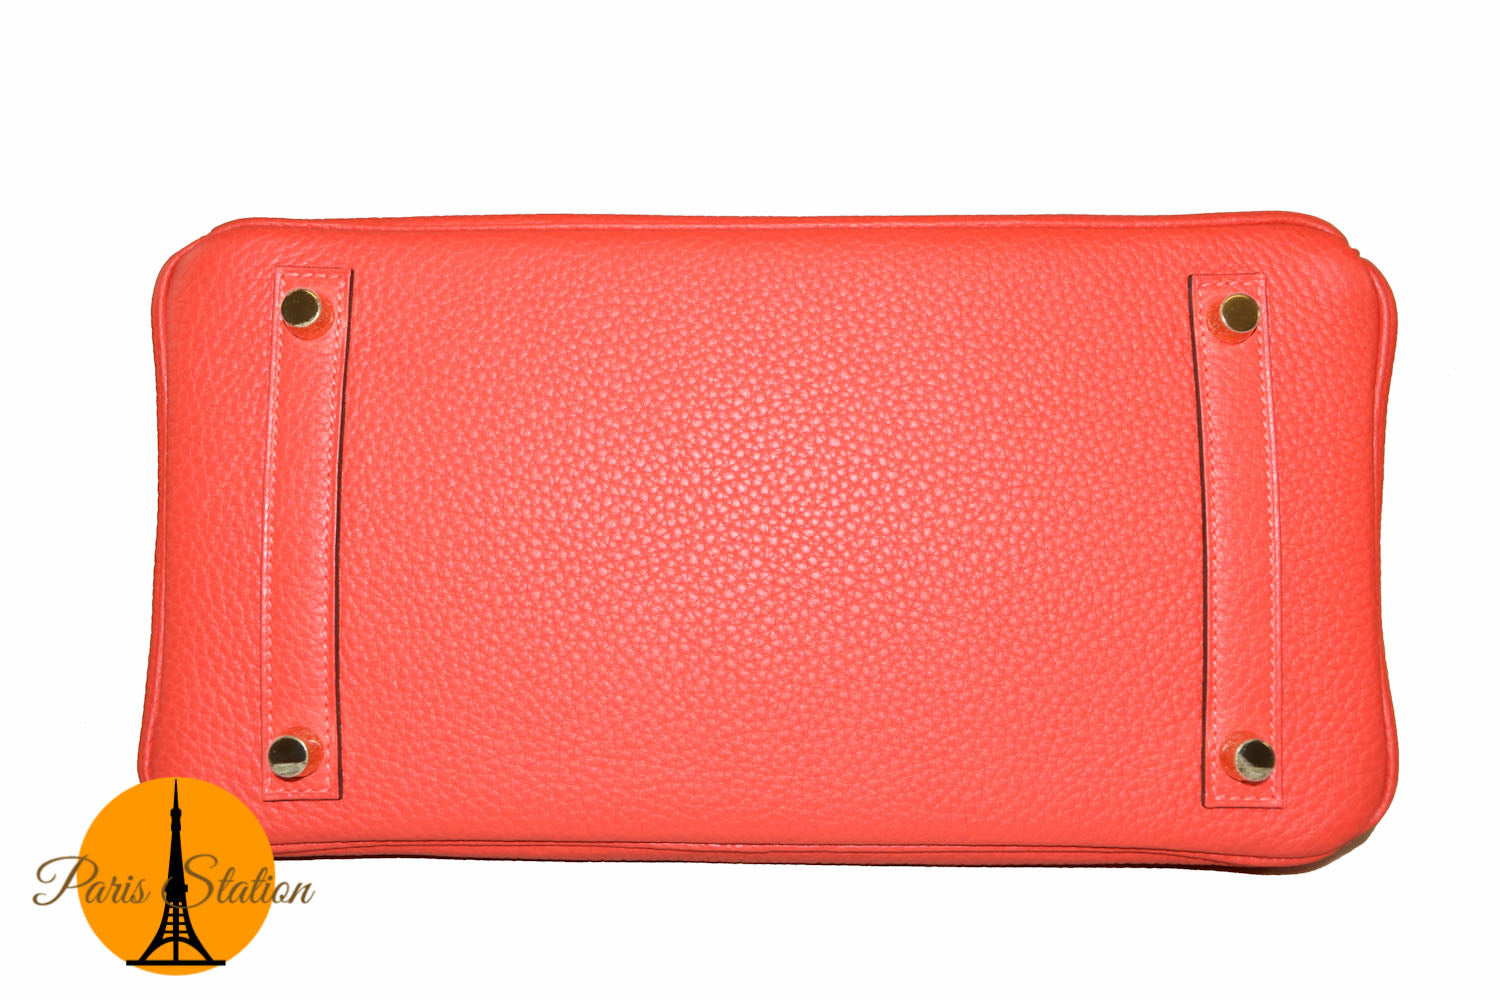 Authentic New Hermes Rouge Pivoine Togo Leather Birkin 30 Bag